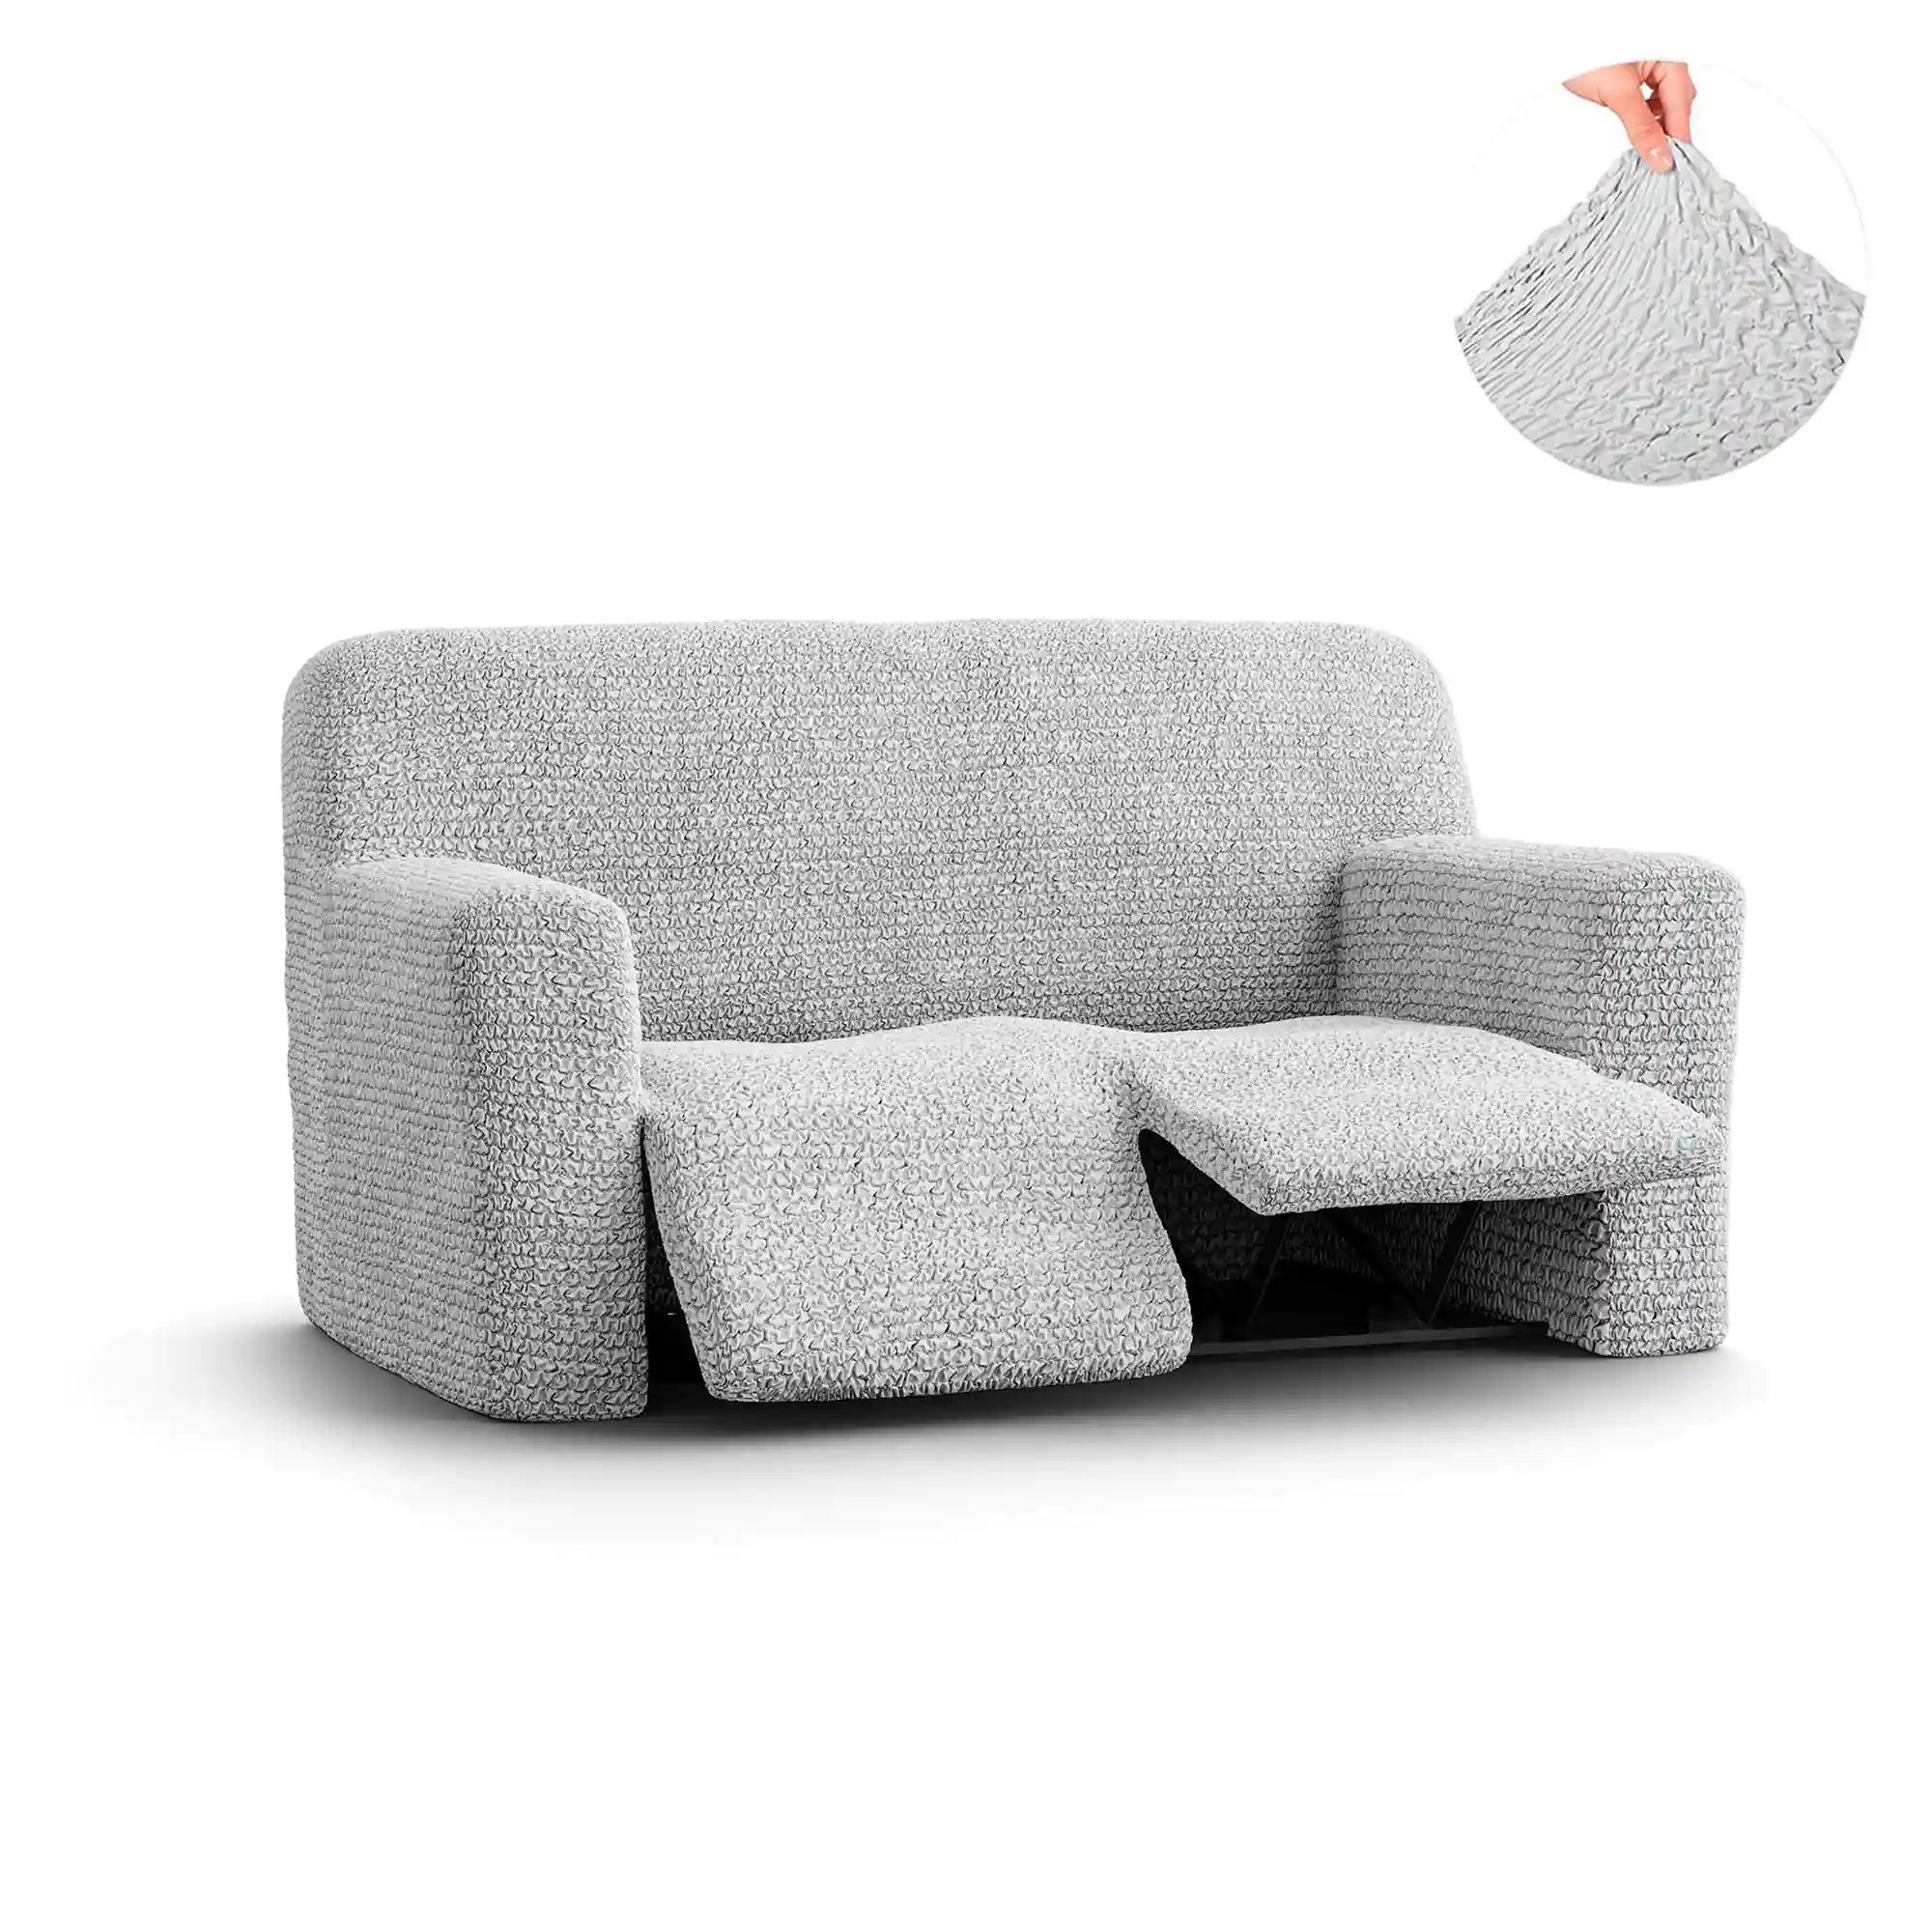 2 Seater Recliner Sofa Cover - Pearl, Microfibra